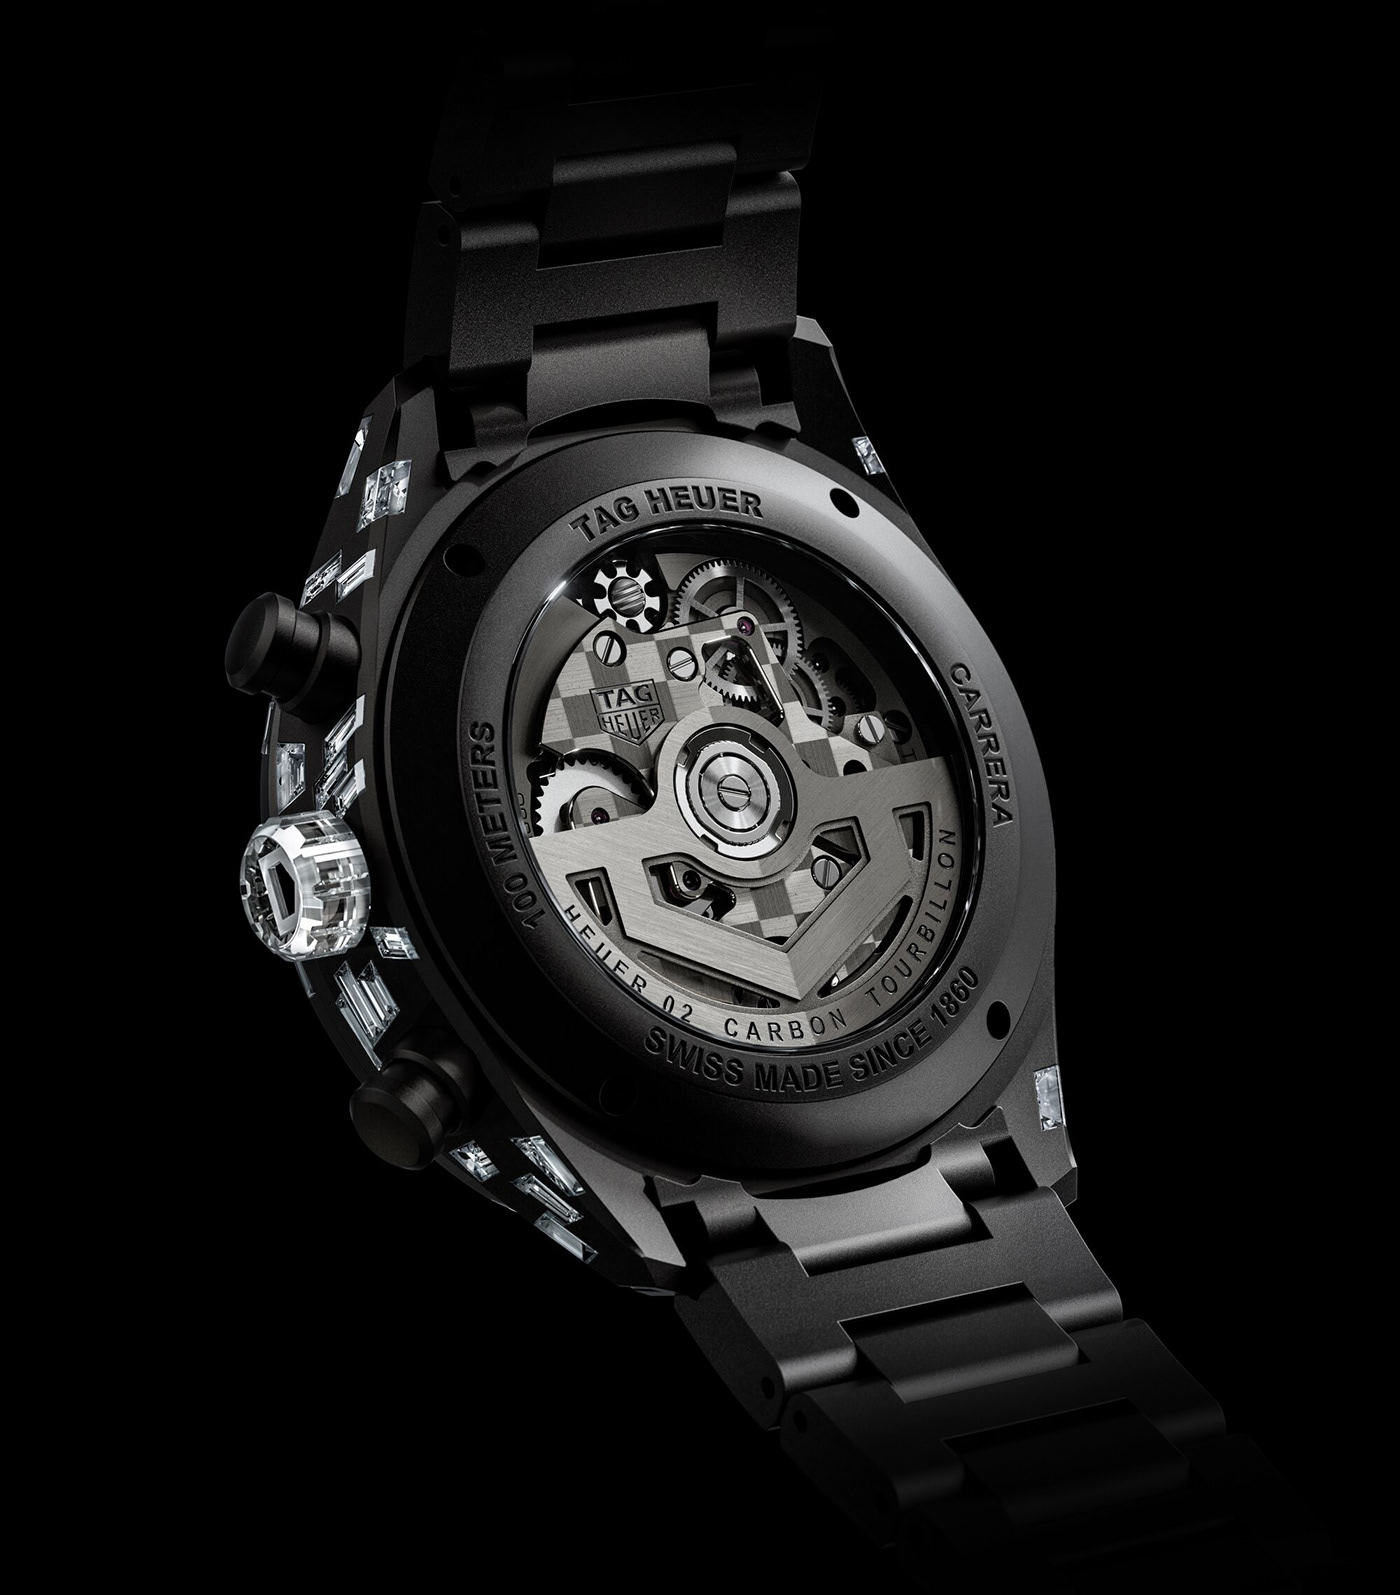 CGI diamonds digitalart horology Jewellery luxury plasma timepiece visualization watch design